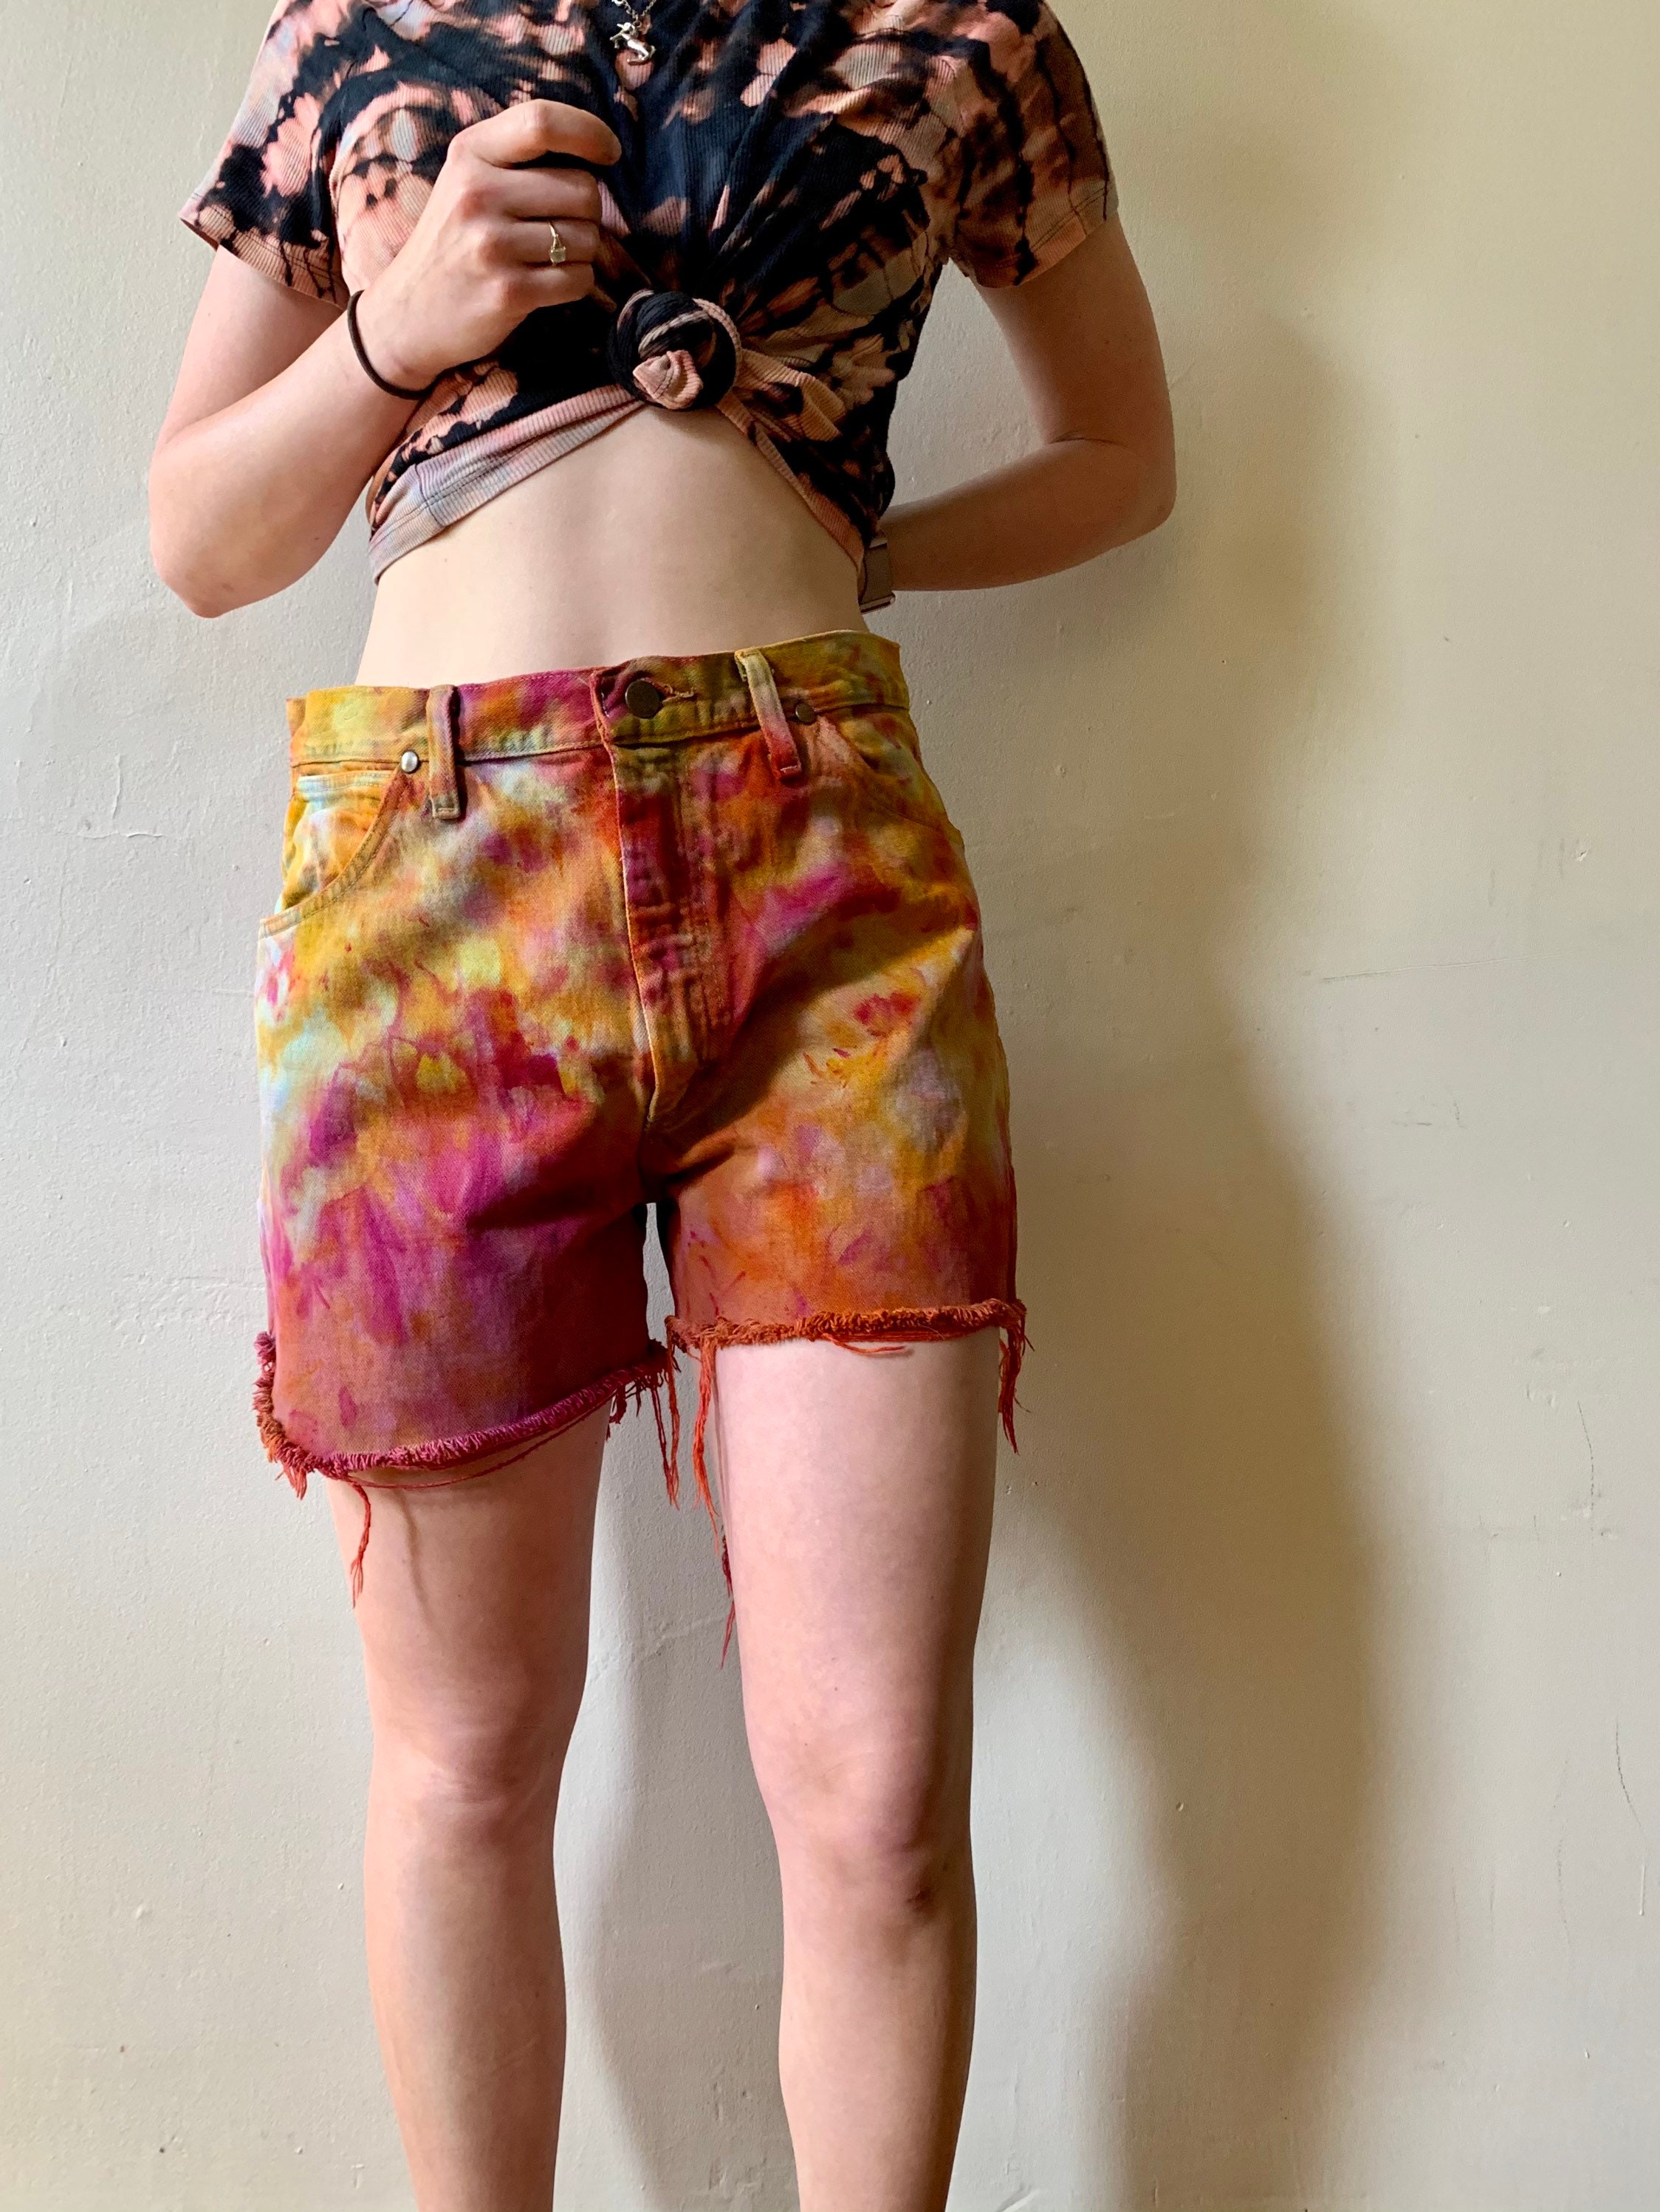 Wrangler Drawstring Short - Second Hand Shorts - Women's - Pink